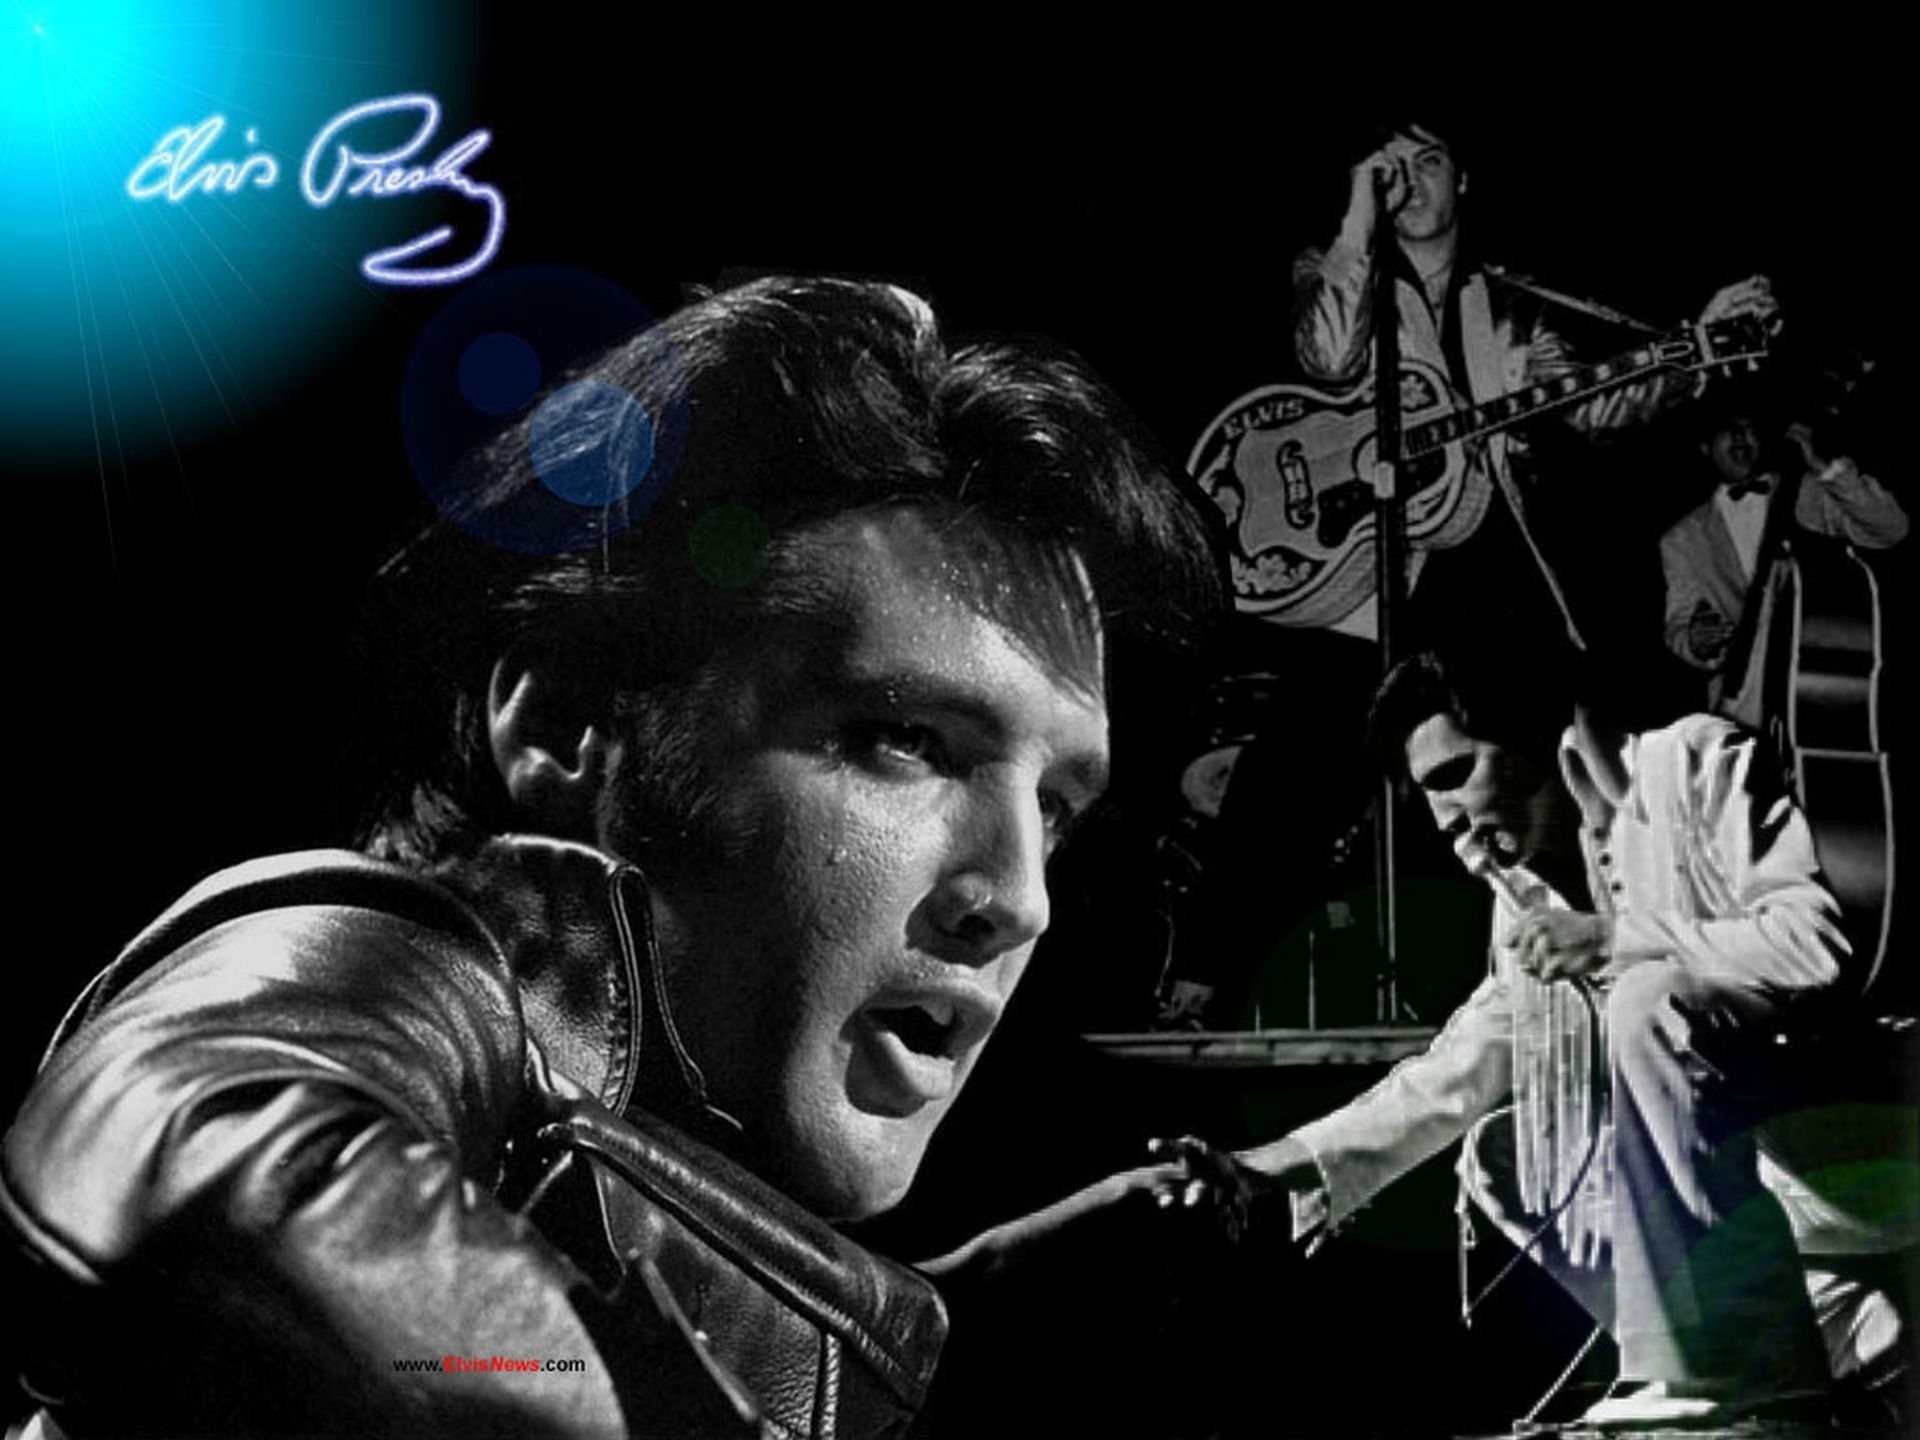 1920x1440 Music - Elvis Presley The King Rock & Roll Music Wallpaper